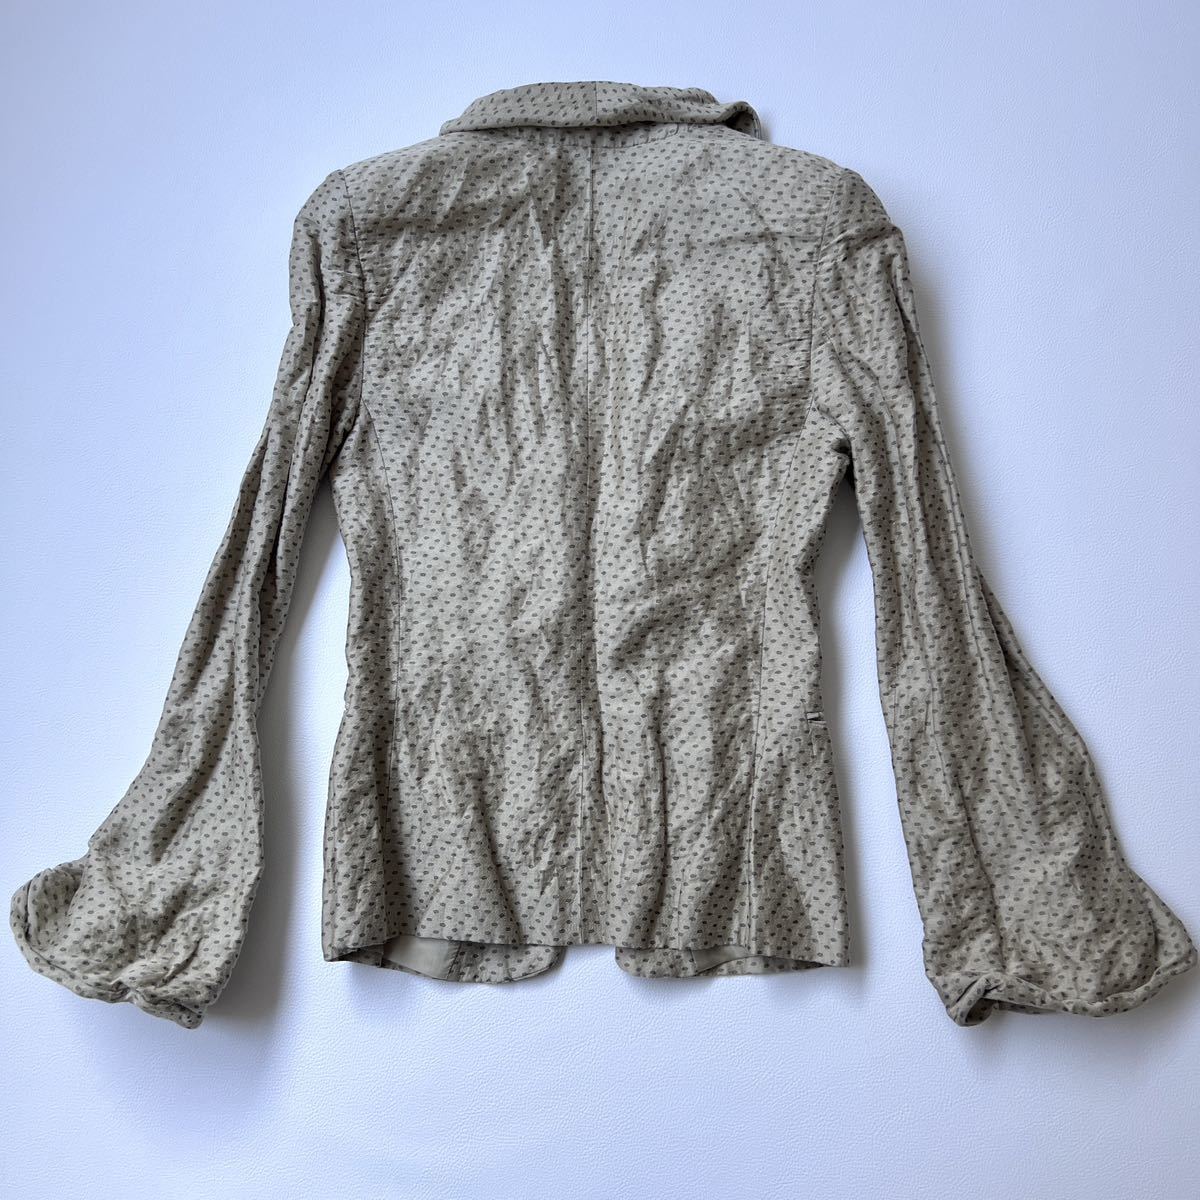 GIORGIO ARMANIjoru geo Armani tailored jacket одиночный жакет помятость обработка точка Lamy шелк . чёрный бирка женский 